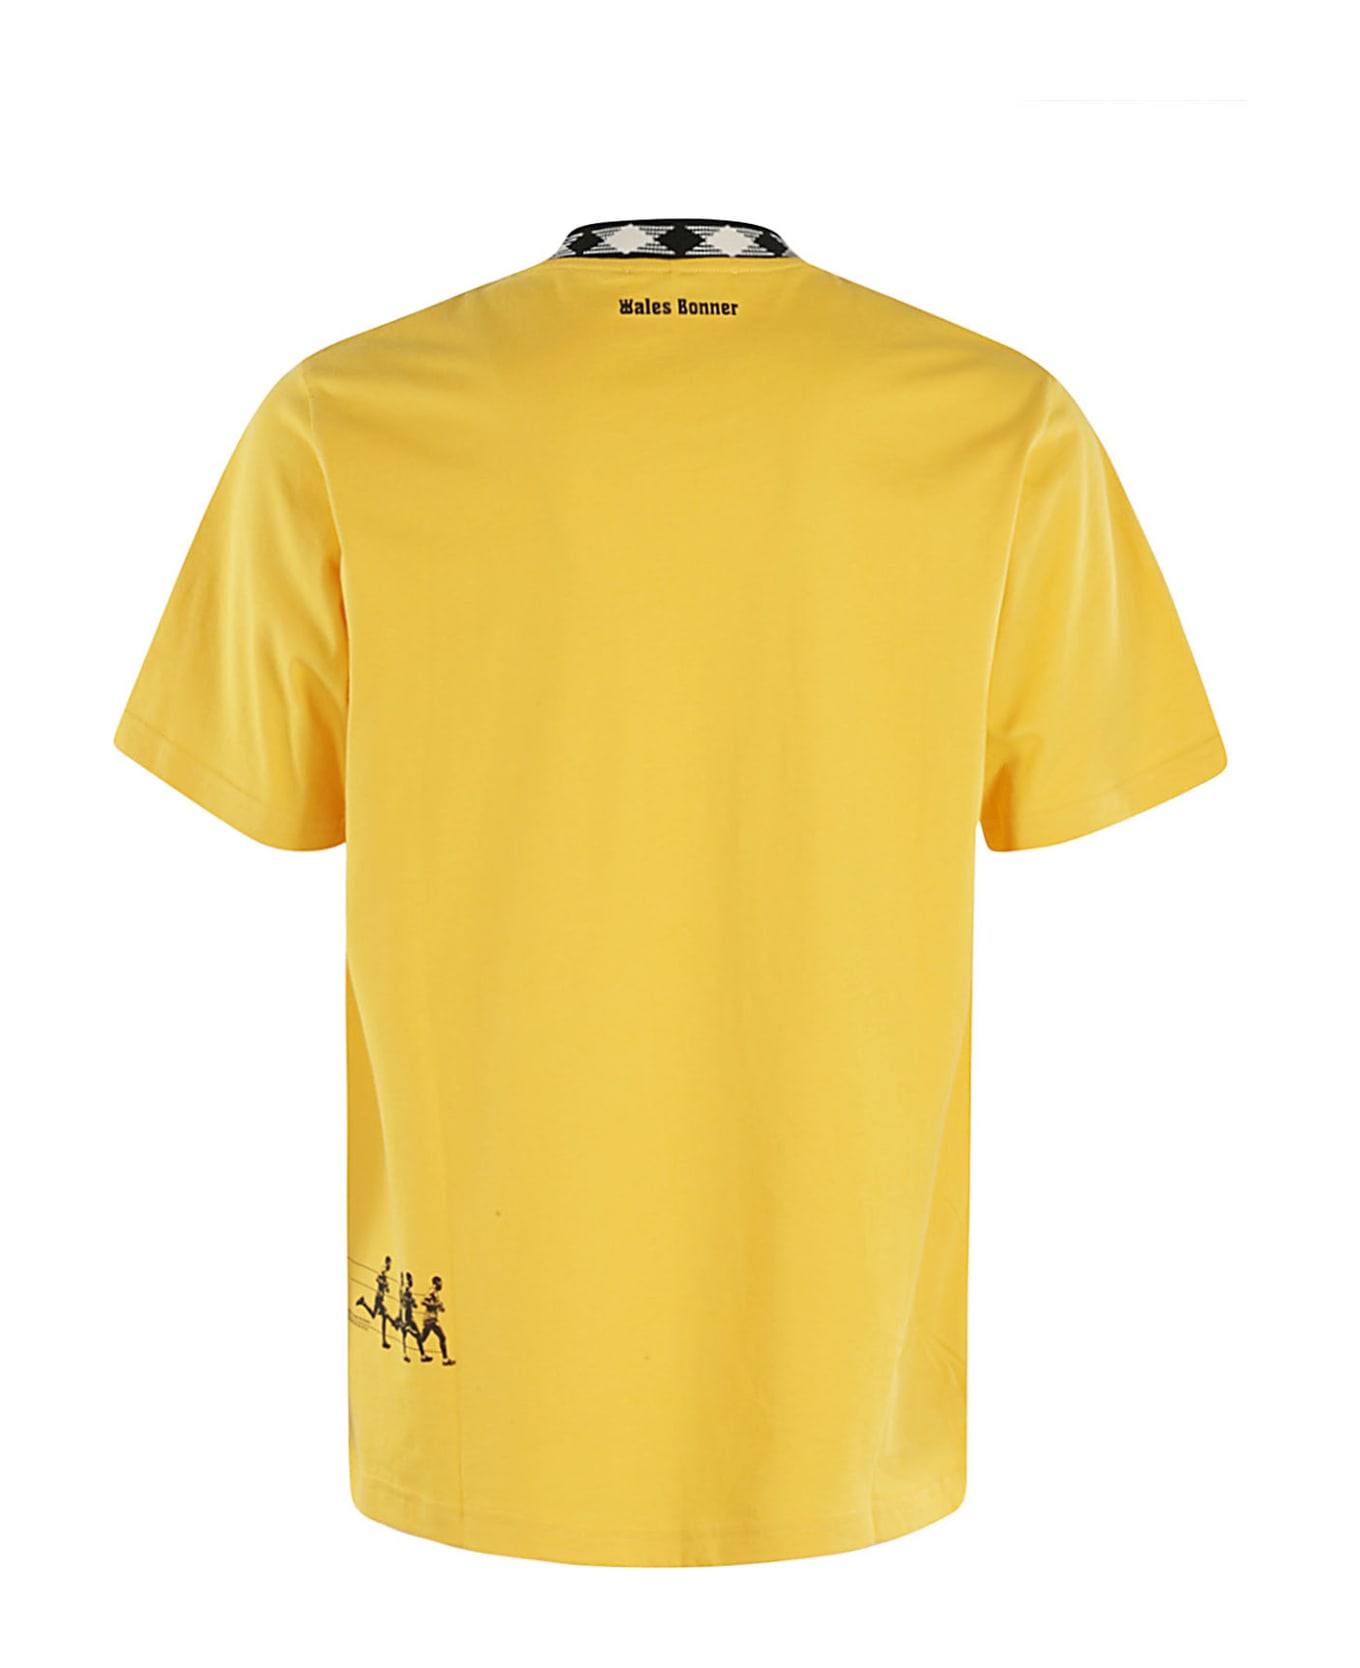 Wales Bonner Endurance T Shirt - Turmeric シャツ